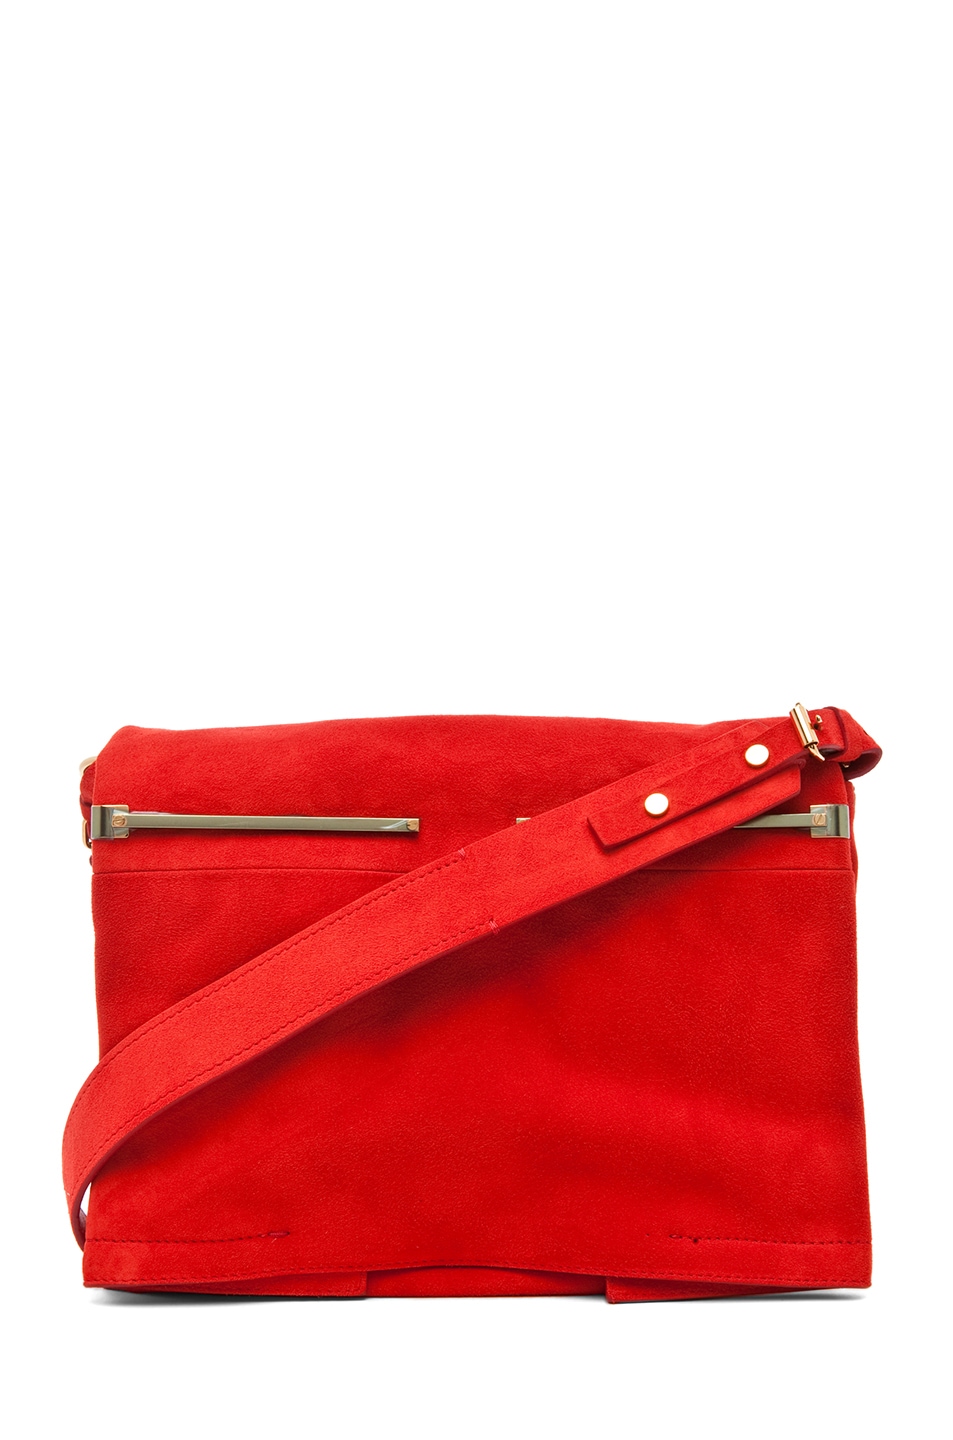 Lanvin Small Shoulder Bag in Poppy | FWRD